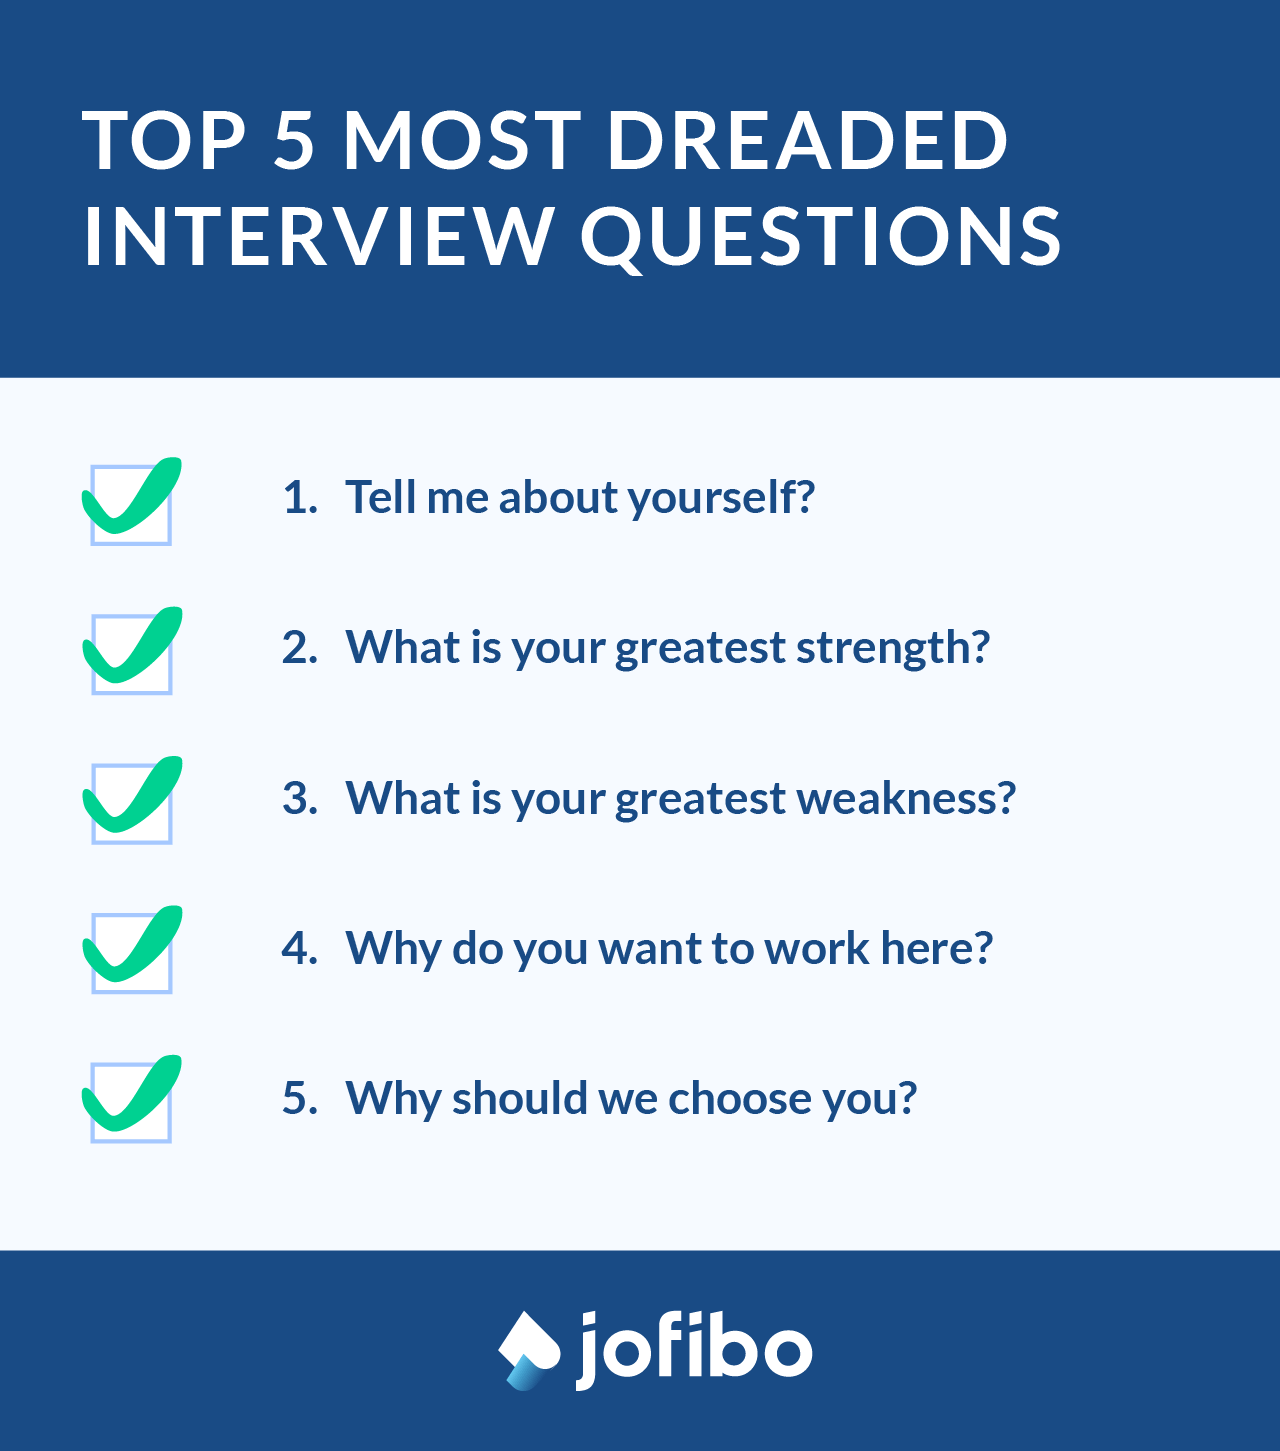 The top 5 most dreaded job interview questions